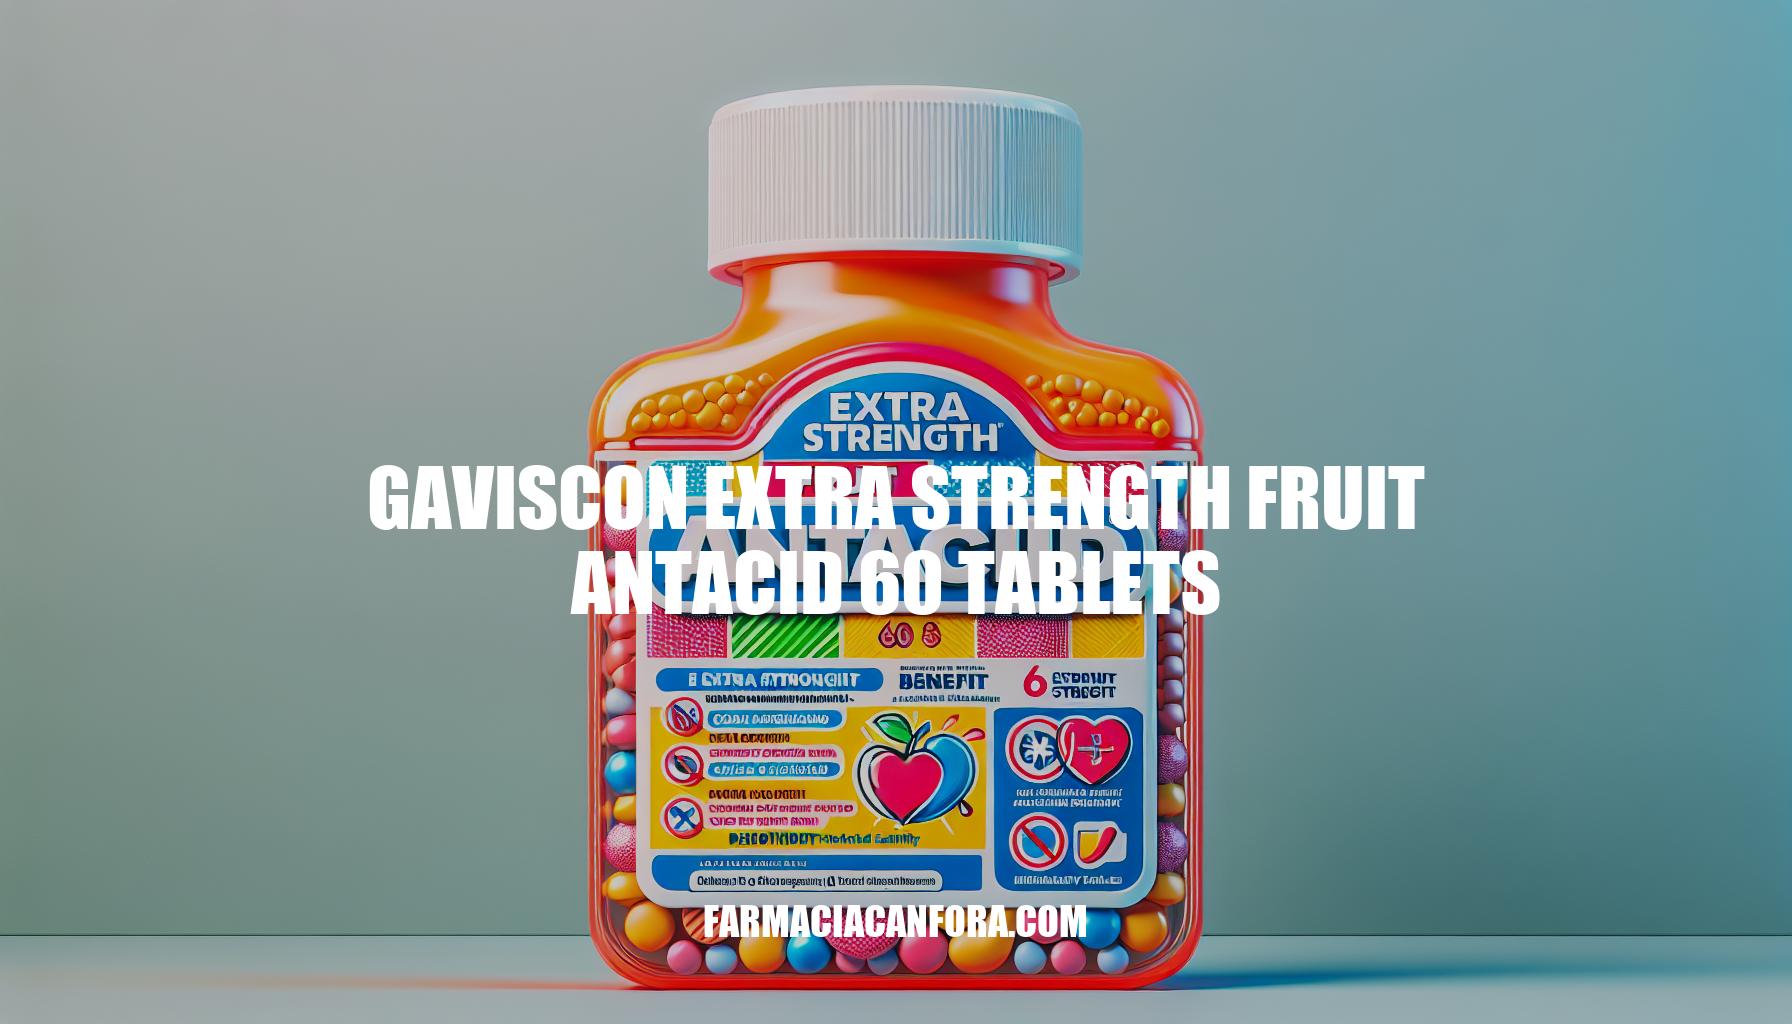 Gaviscon Extra Strength Fruit Antacid 60 Tablets: Benefits and Usage